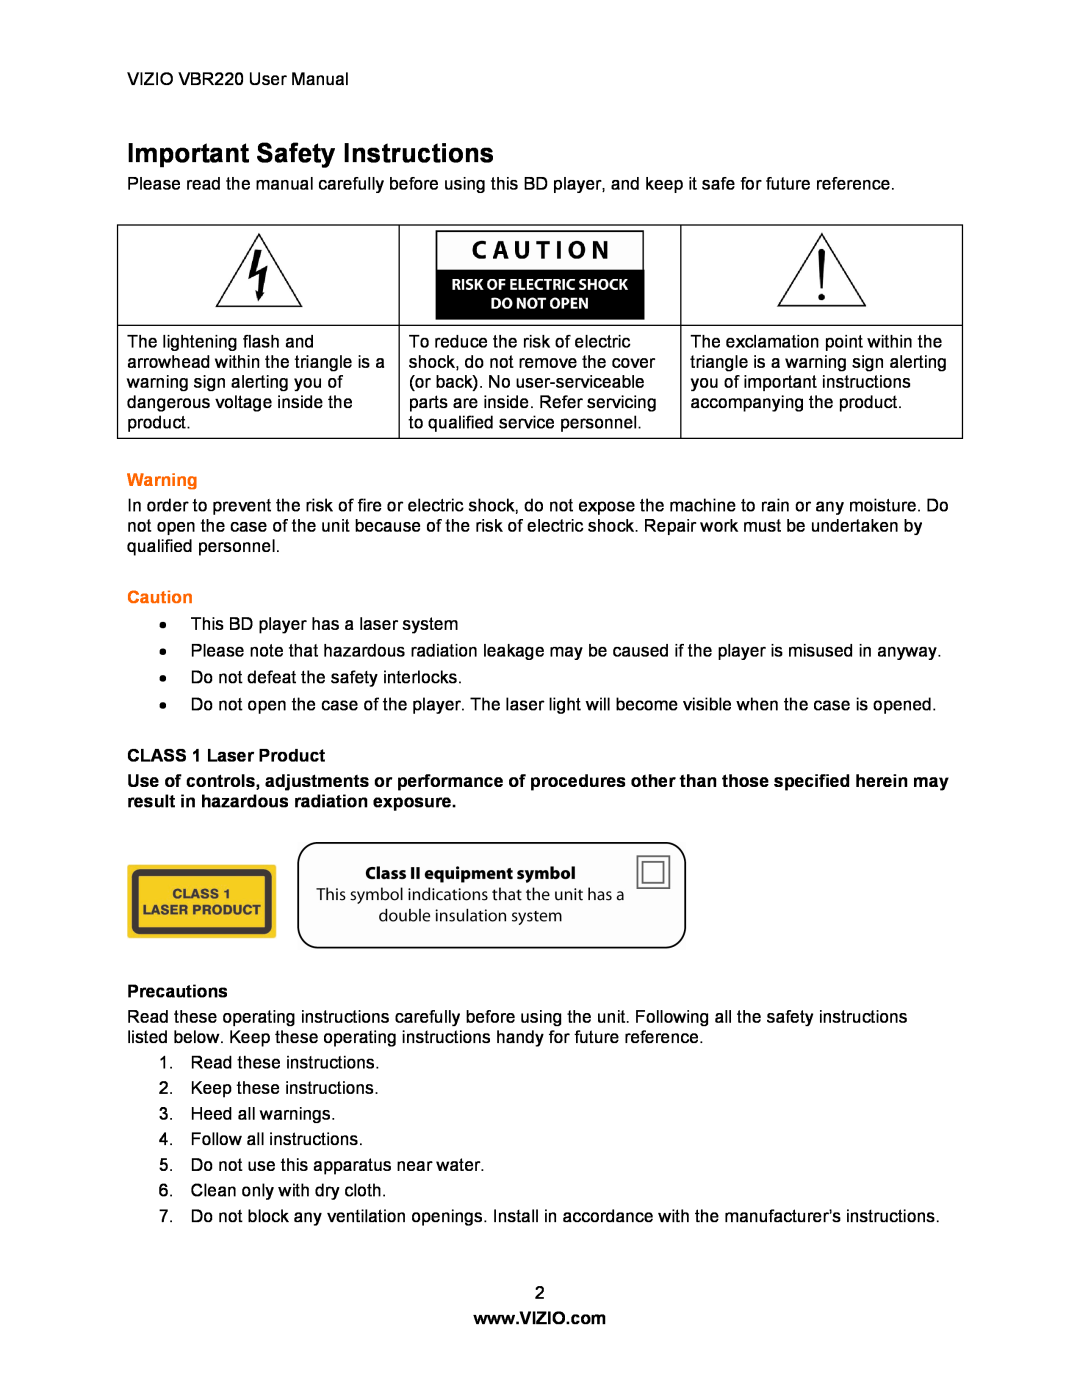 Panasonic VBR220 user manual Important Safety Instructions, CLASS 1 Laser Product, Precautions 